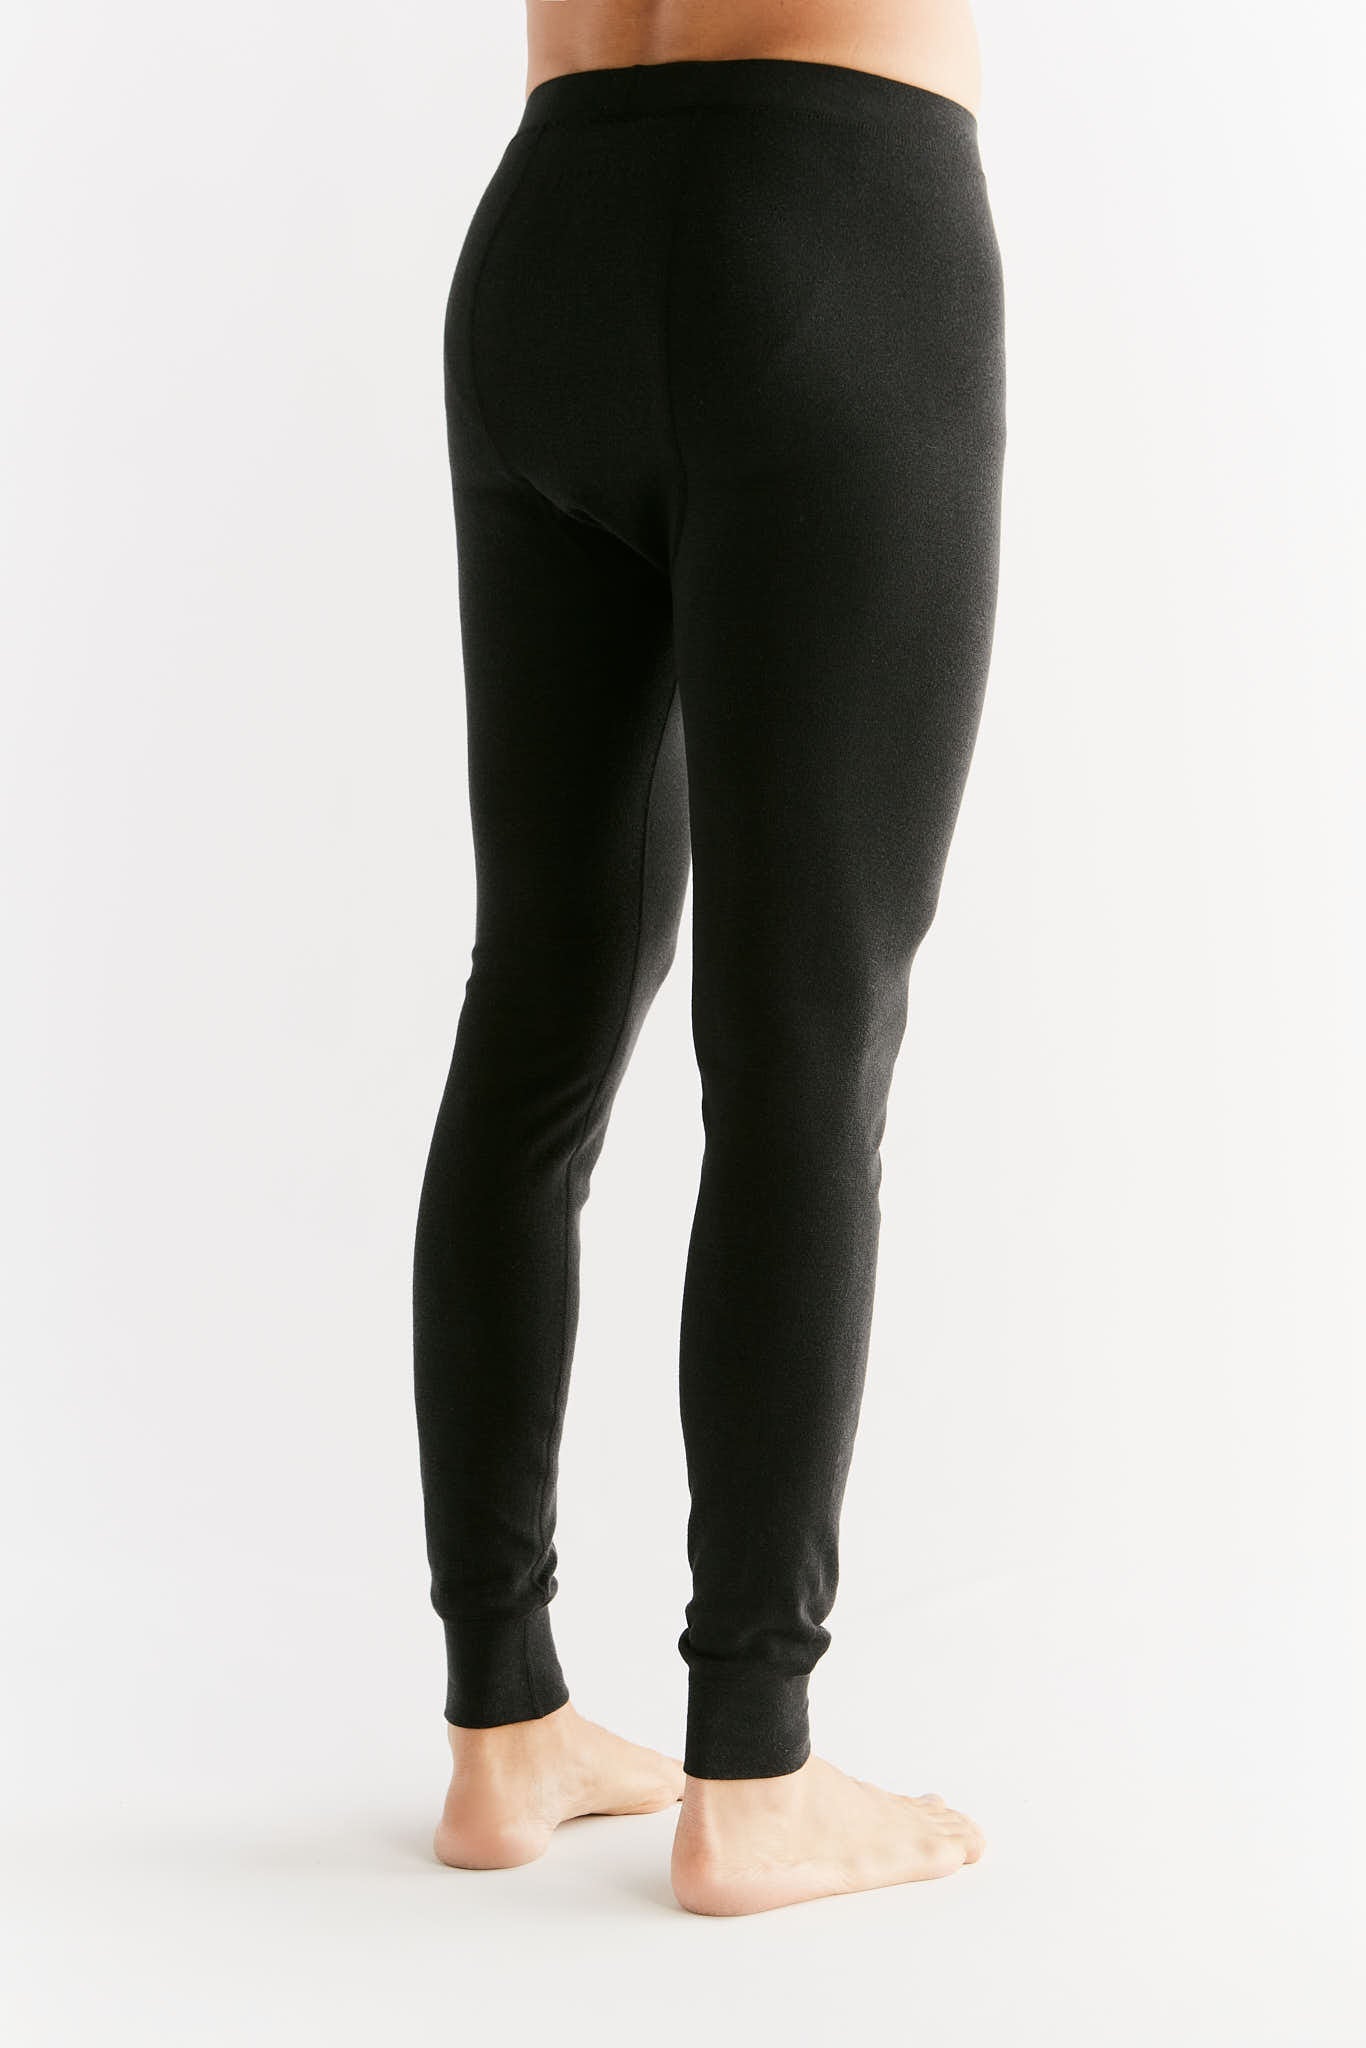 T2399-01 | Men Warm Leggings  - Black